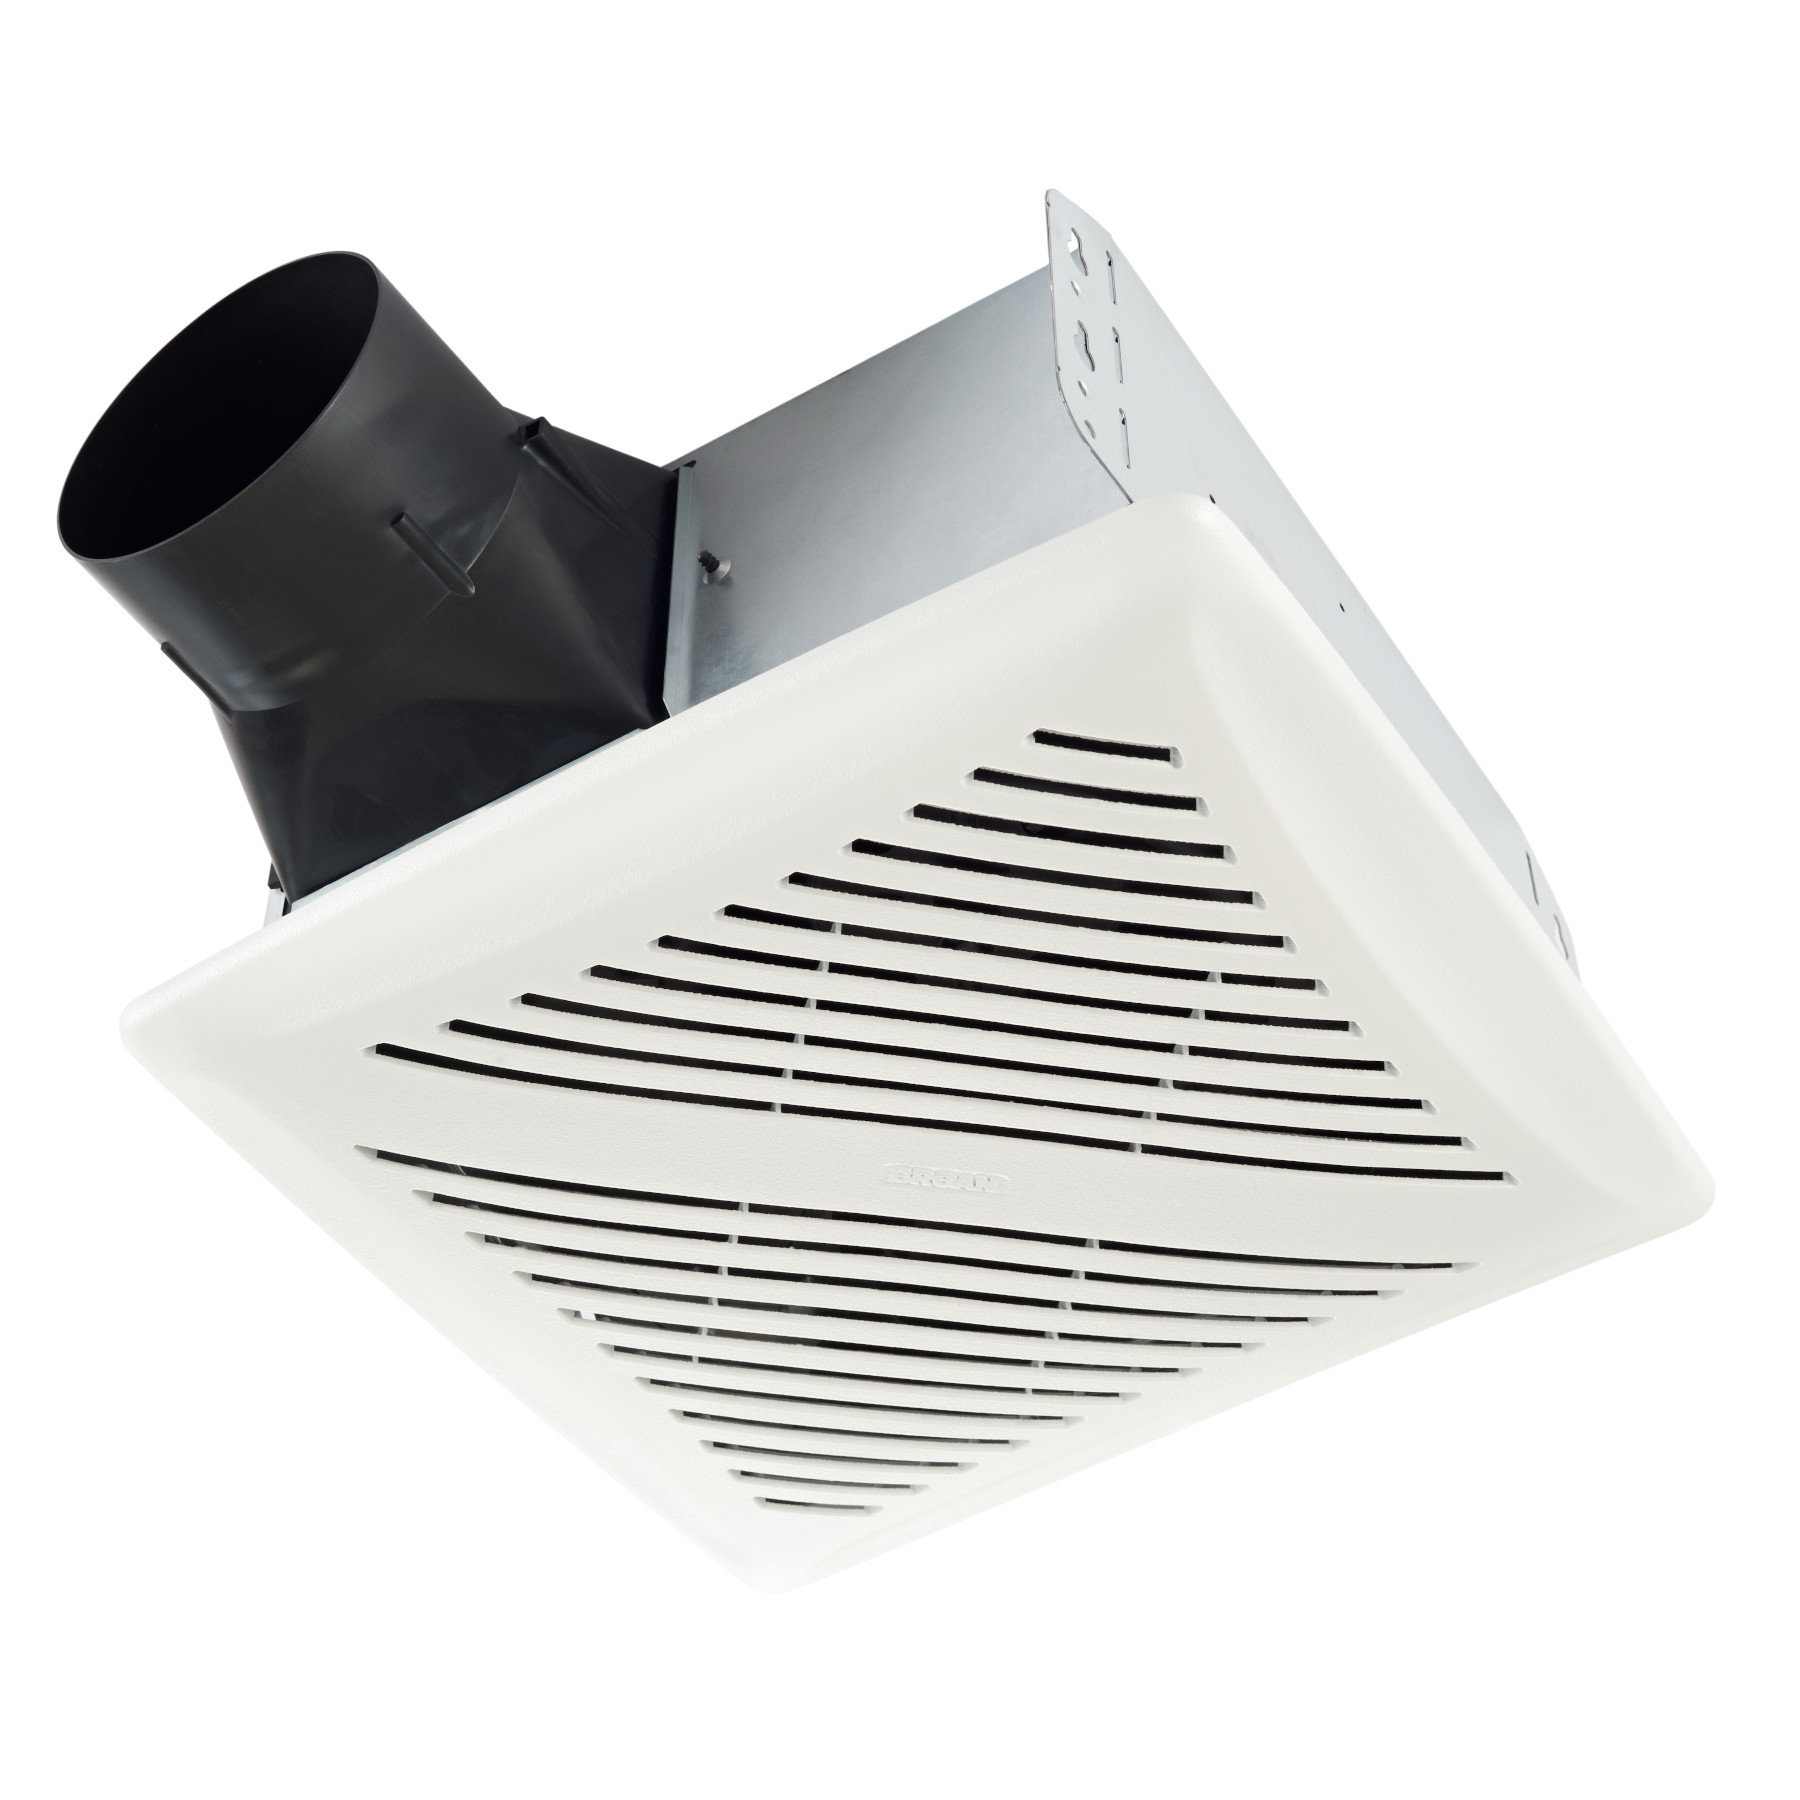 AE50110DCS Broan® Humidity Sensing Bathroom Exhaust Fan ENERGY STAR®,  50-110 CFM